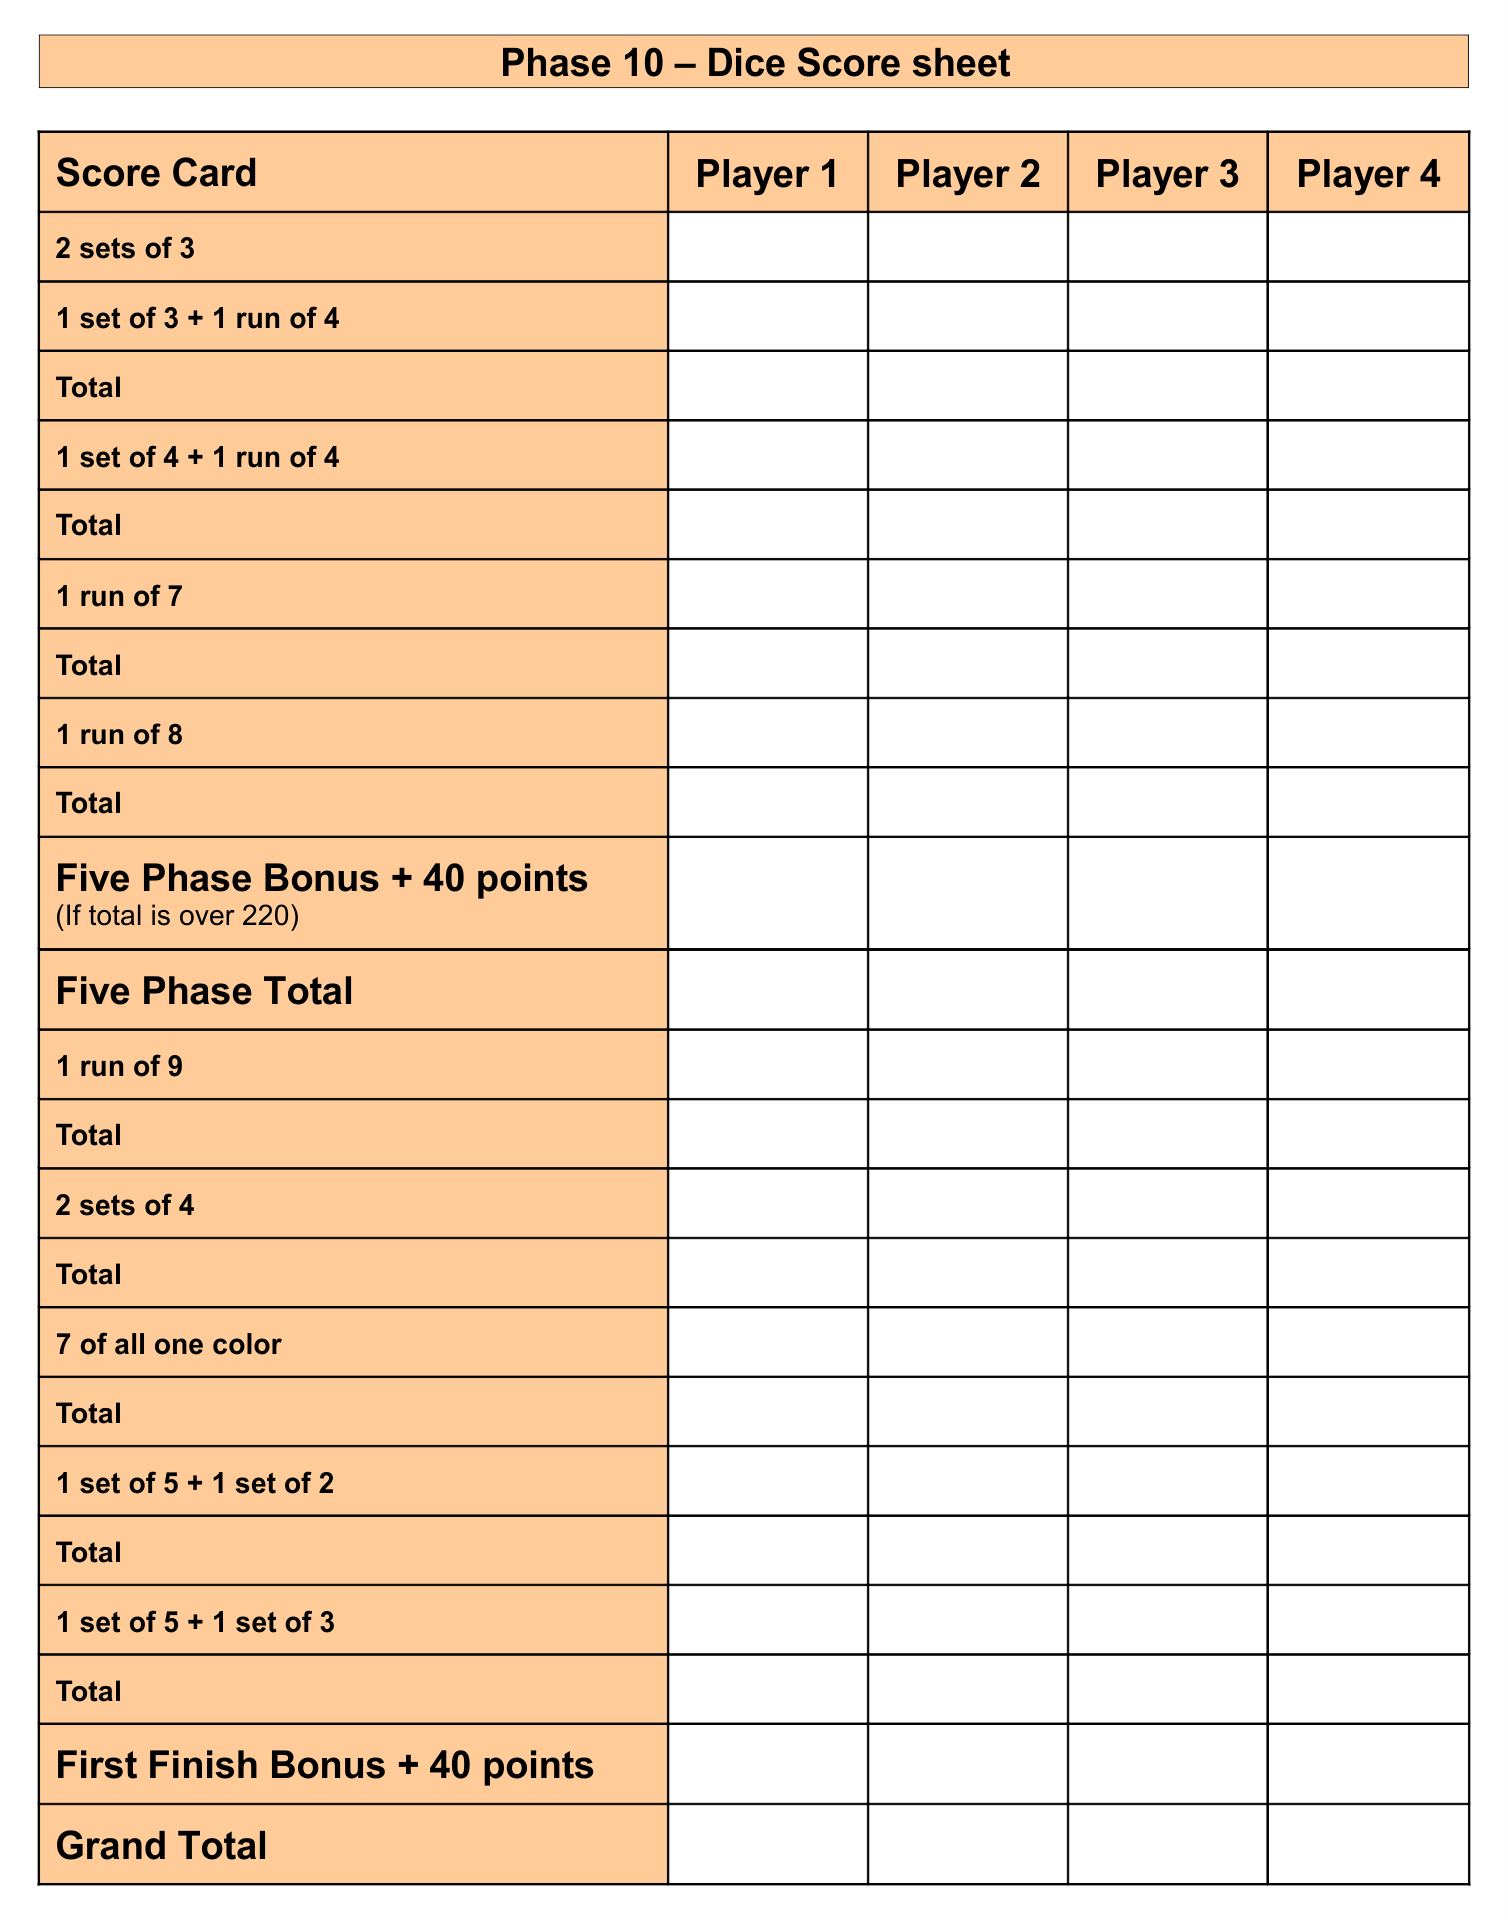 Phase 10 Dice Game Score Sheet Pad of 50 